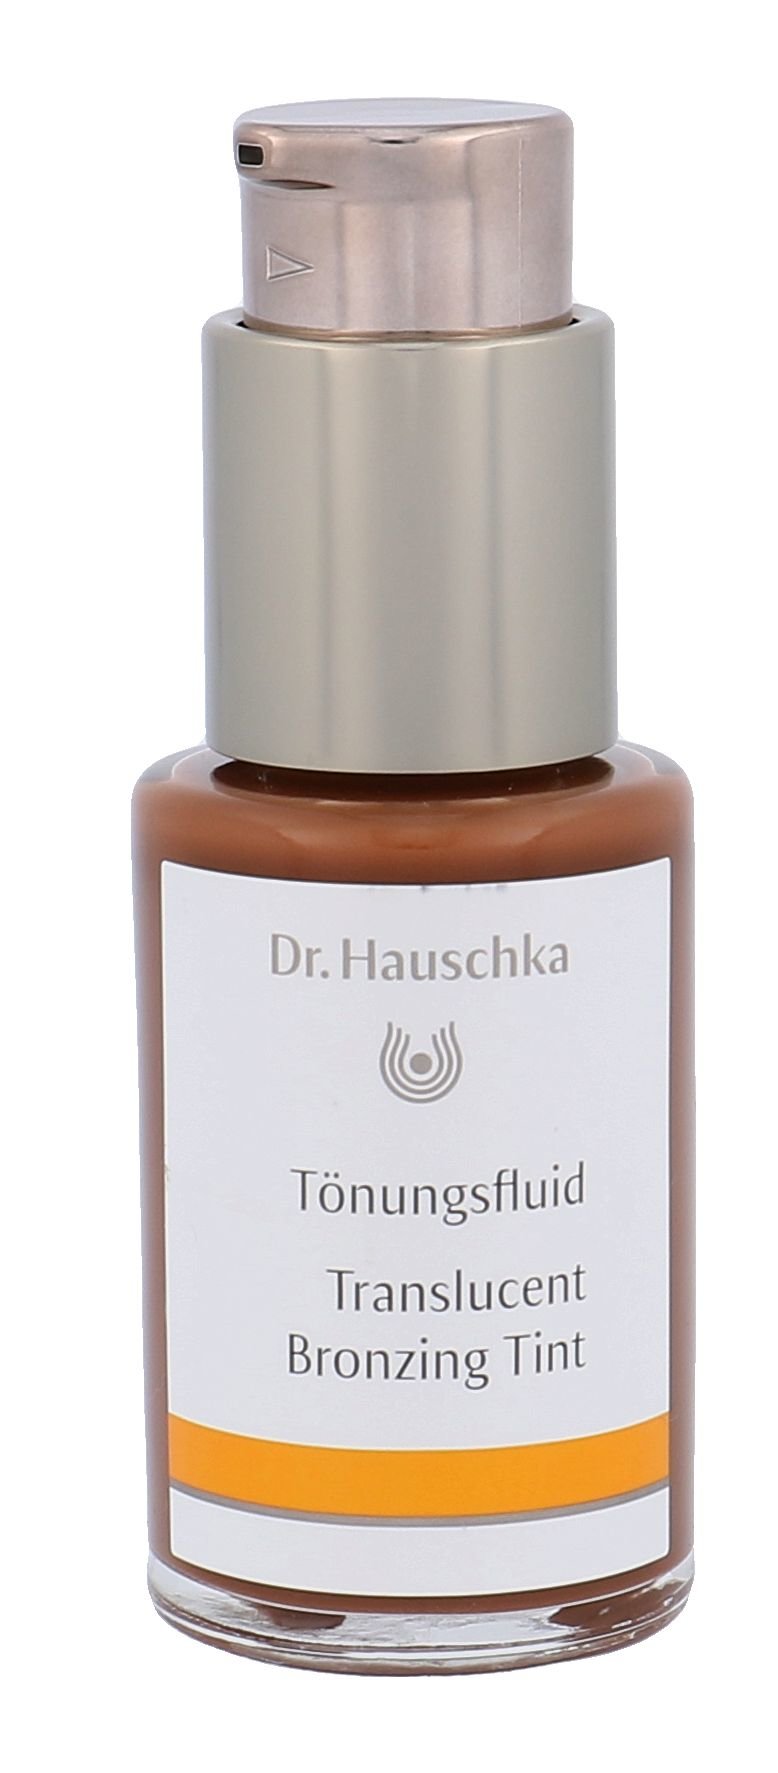 Dr. Hauschka Translucent Bronzing Tint makiažo pagrindas